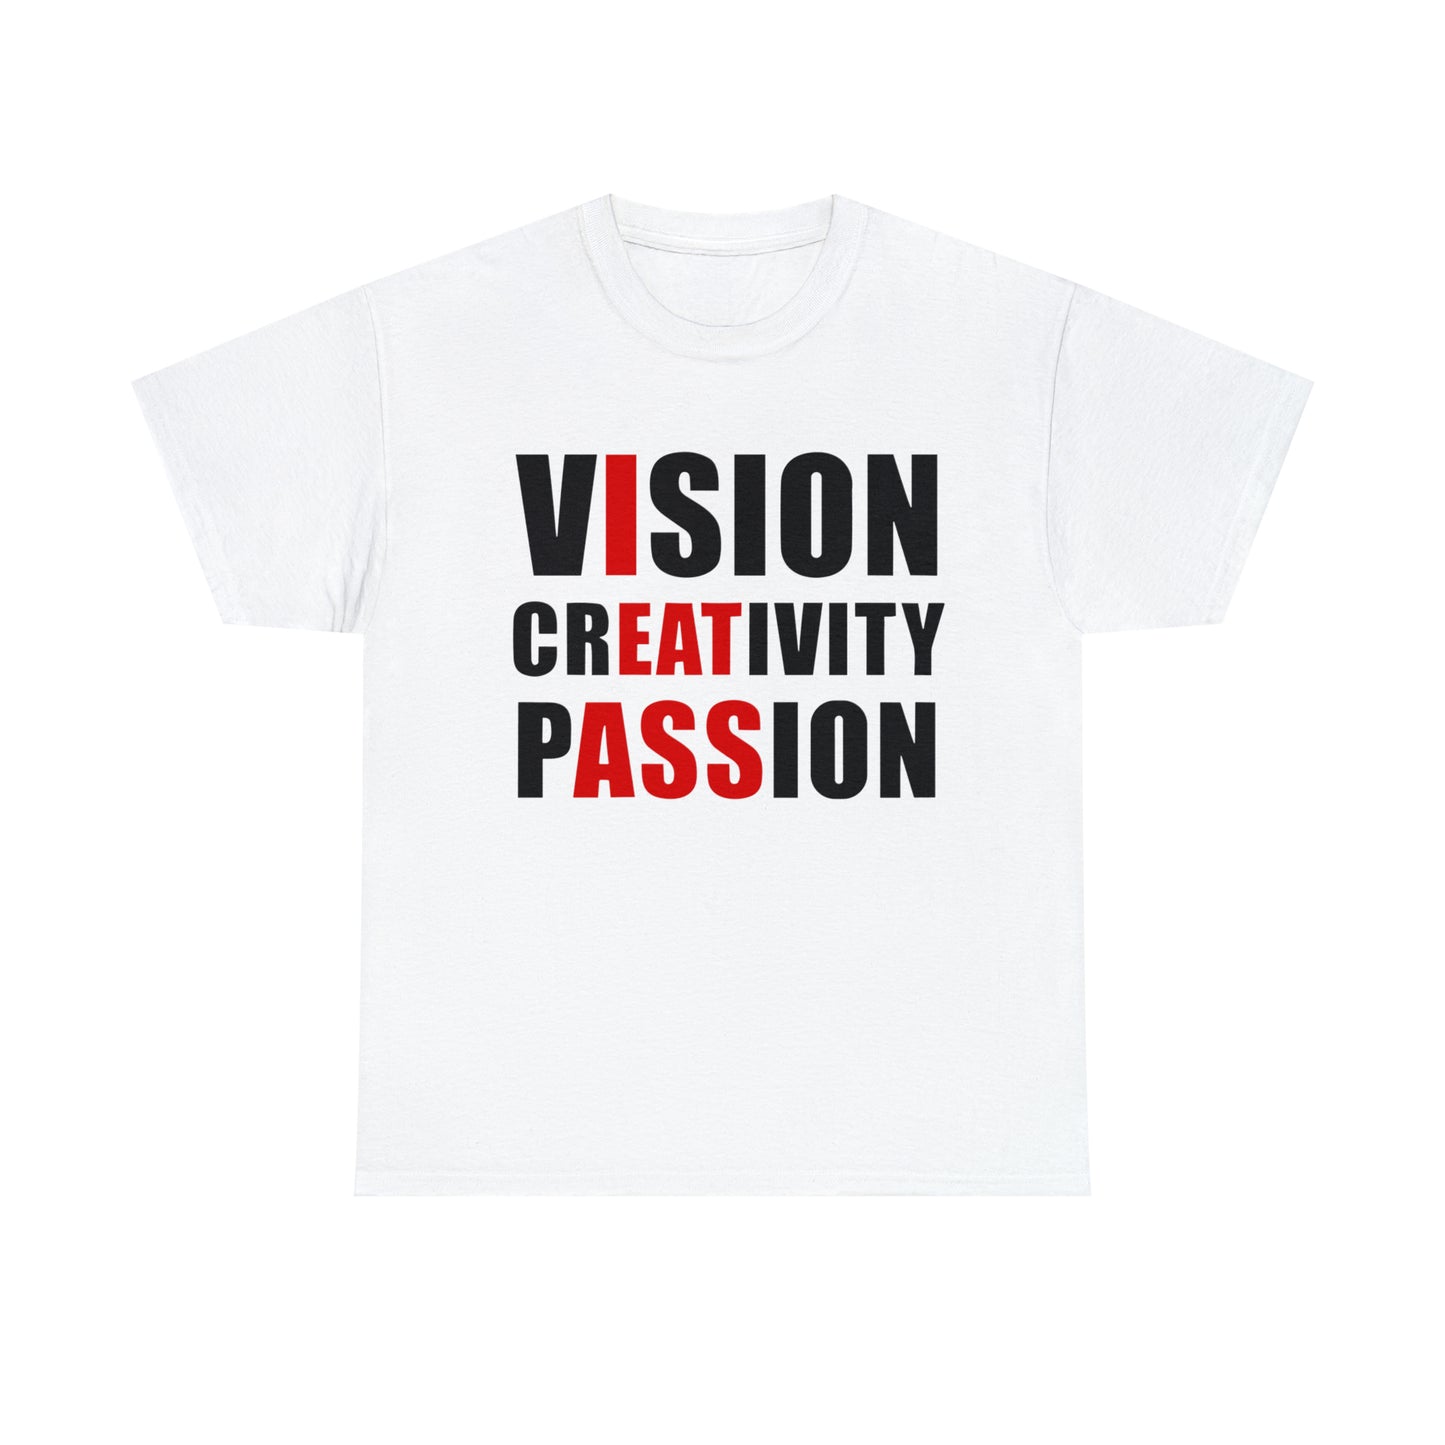 "Vision Creativity Passion" Tee